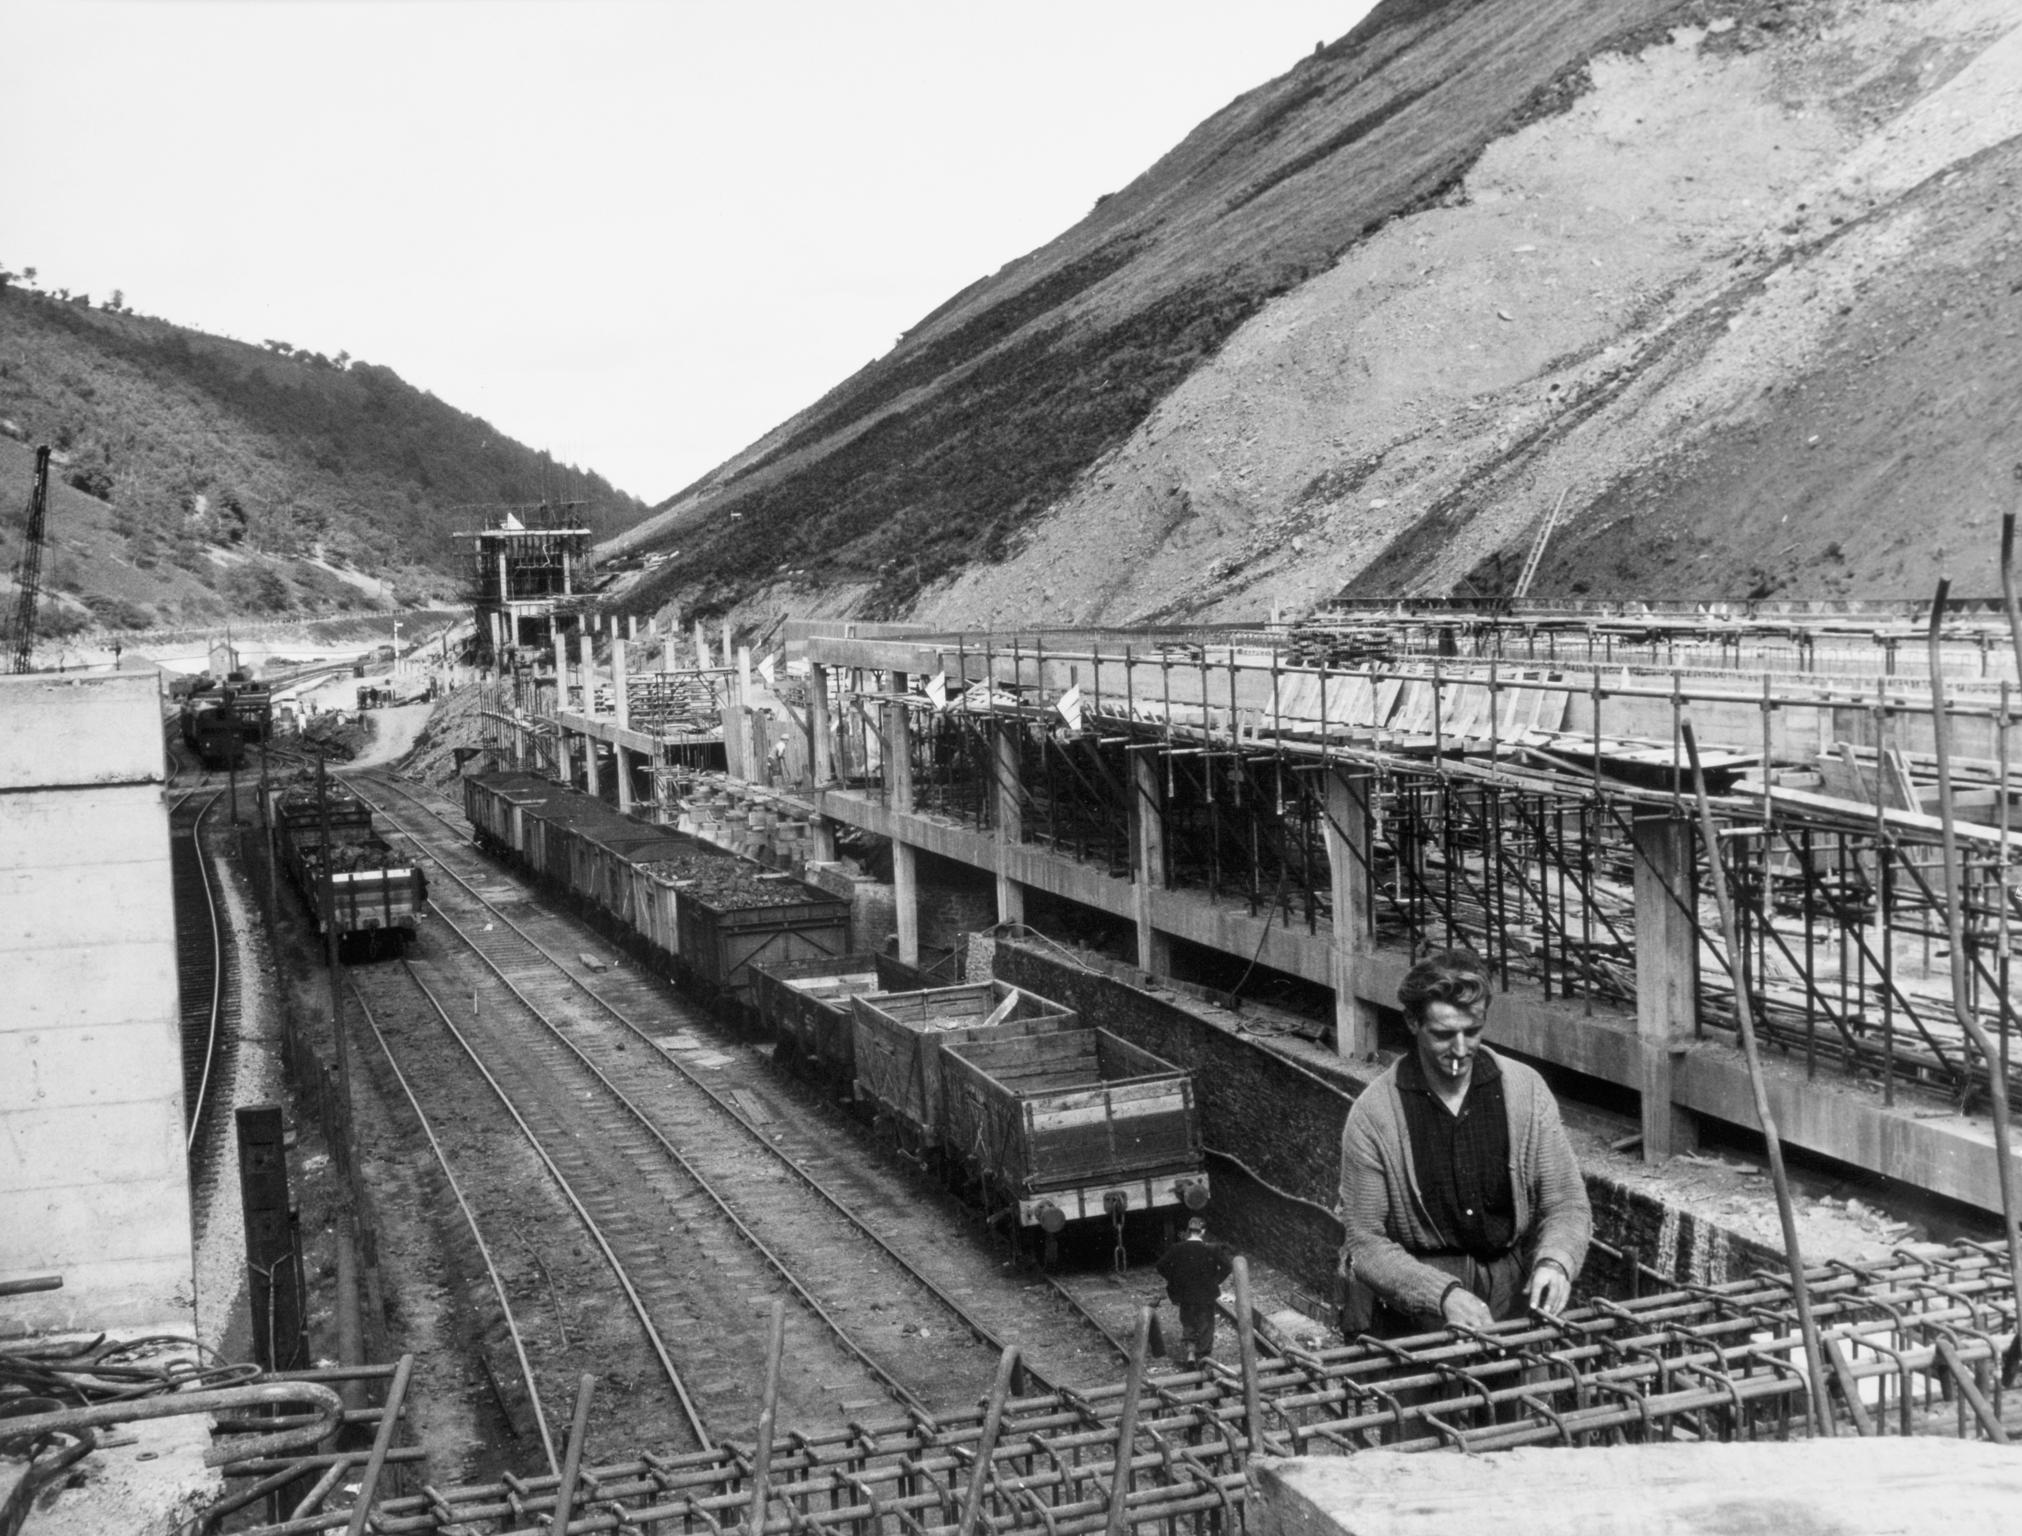 Hafodyrynys new drift mine, photograph